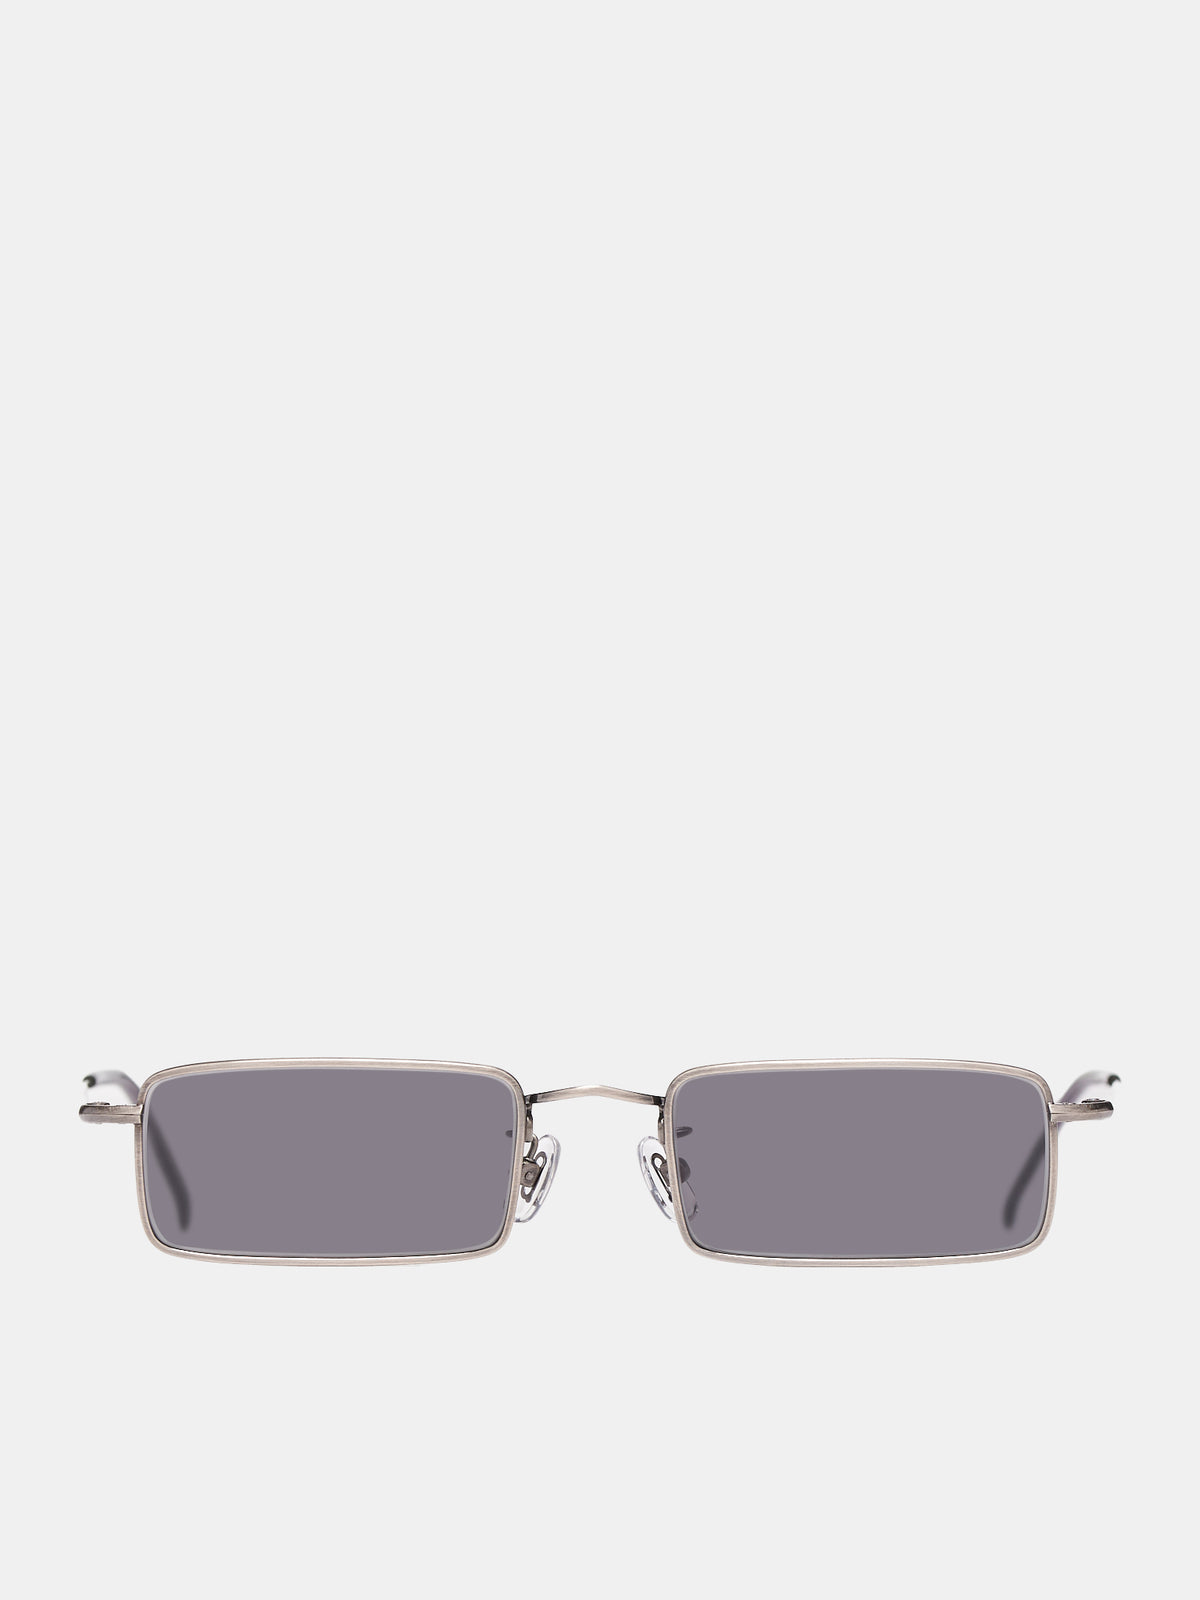 ST Titan Brighton Sunglasses (ST-TITAN-BRIGHTON-AS-FLAT-GRAY)